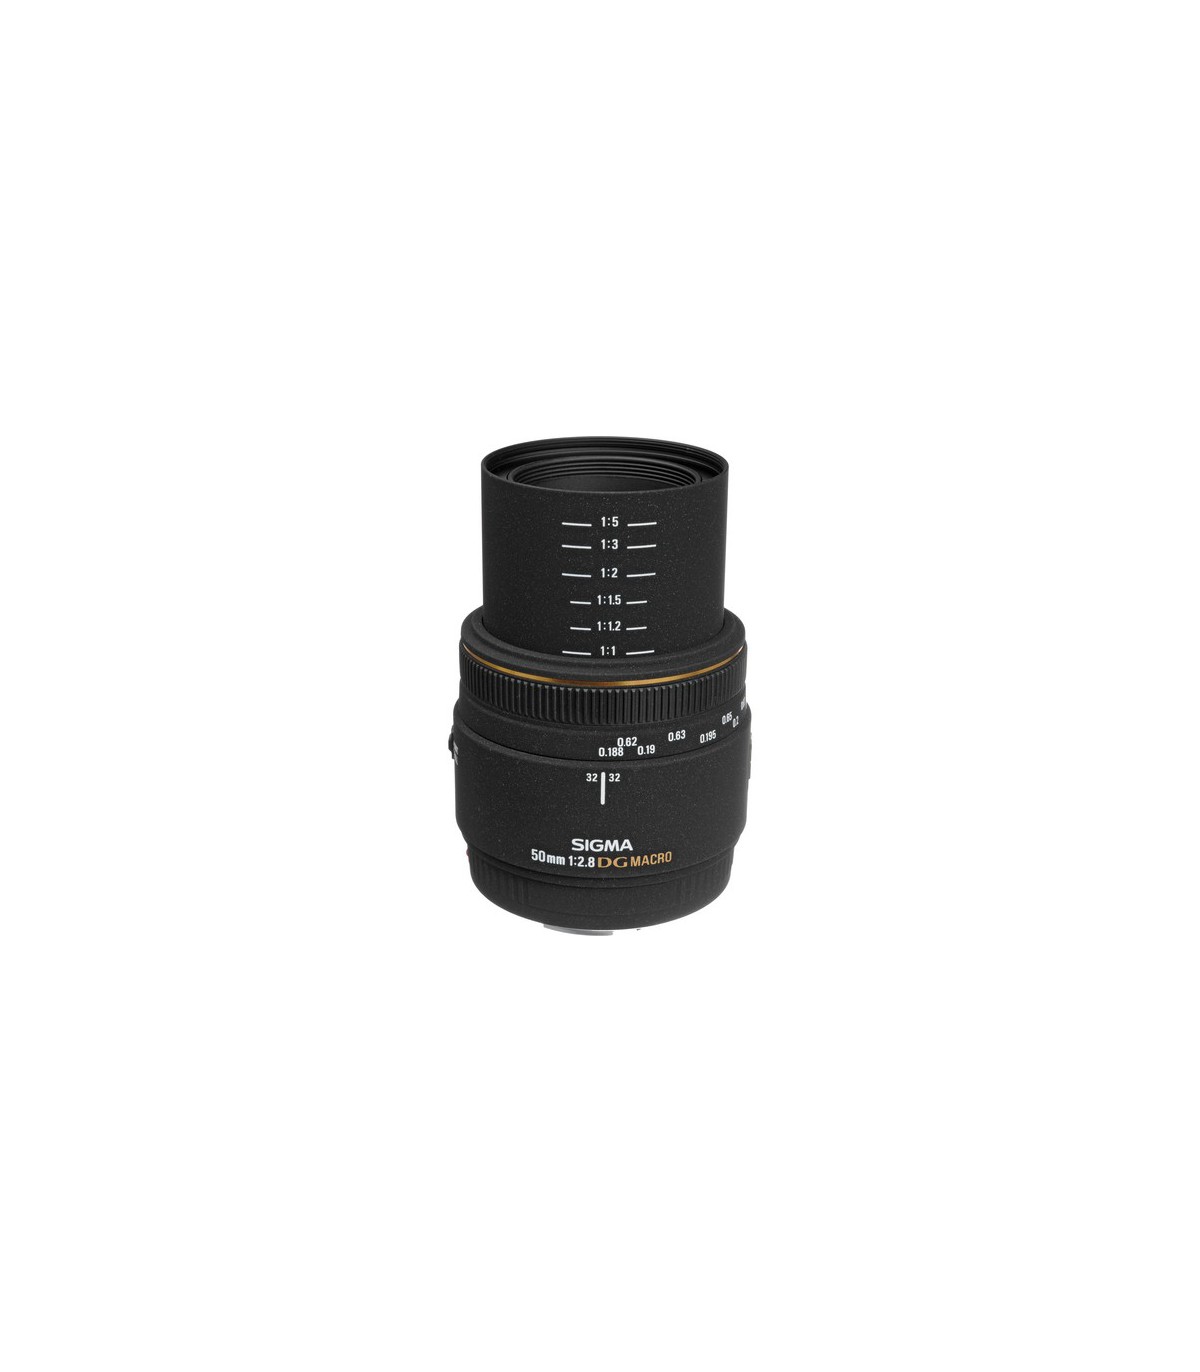  لنز دوربین عکاسی سیگما 50mm f/2.8 EX DG Macro – Nikon Mount